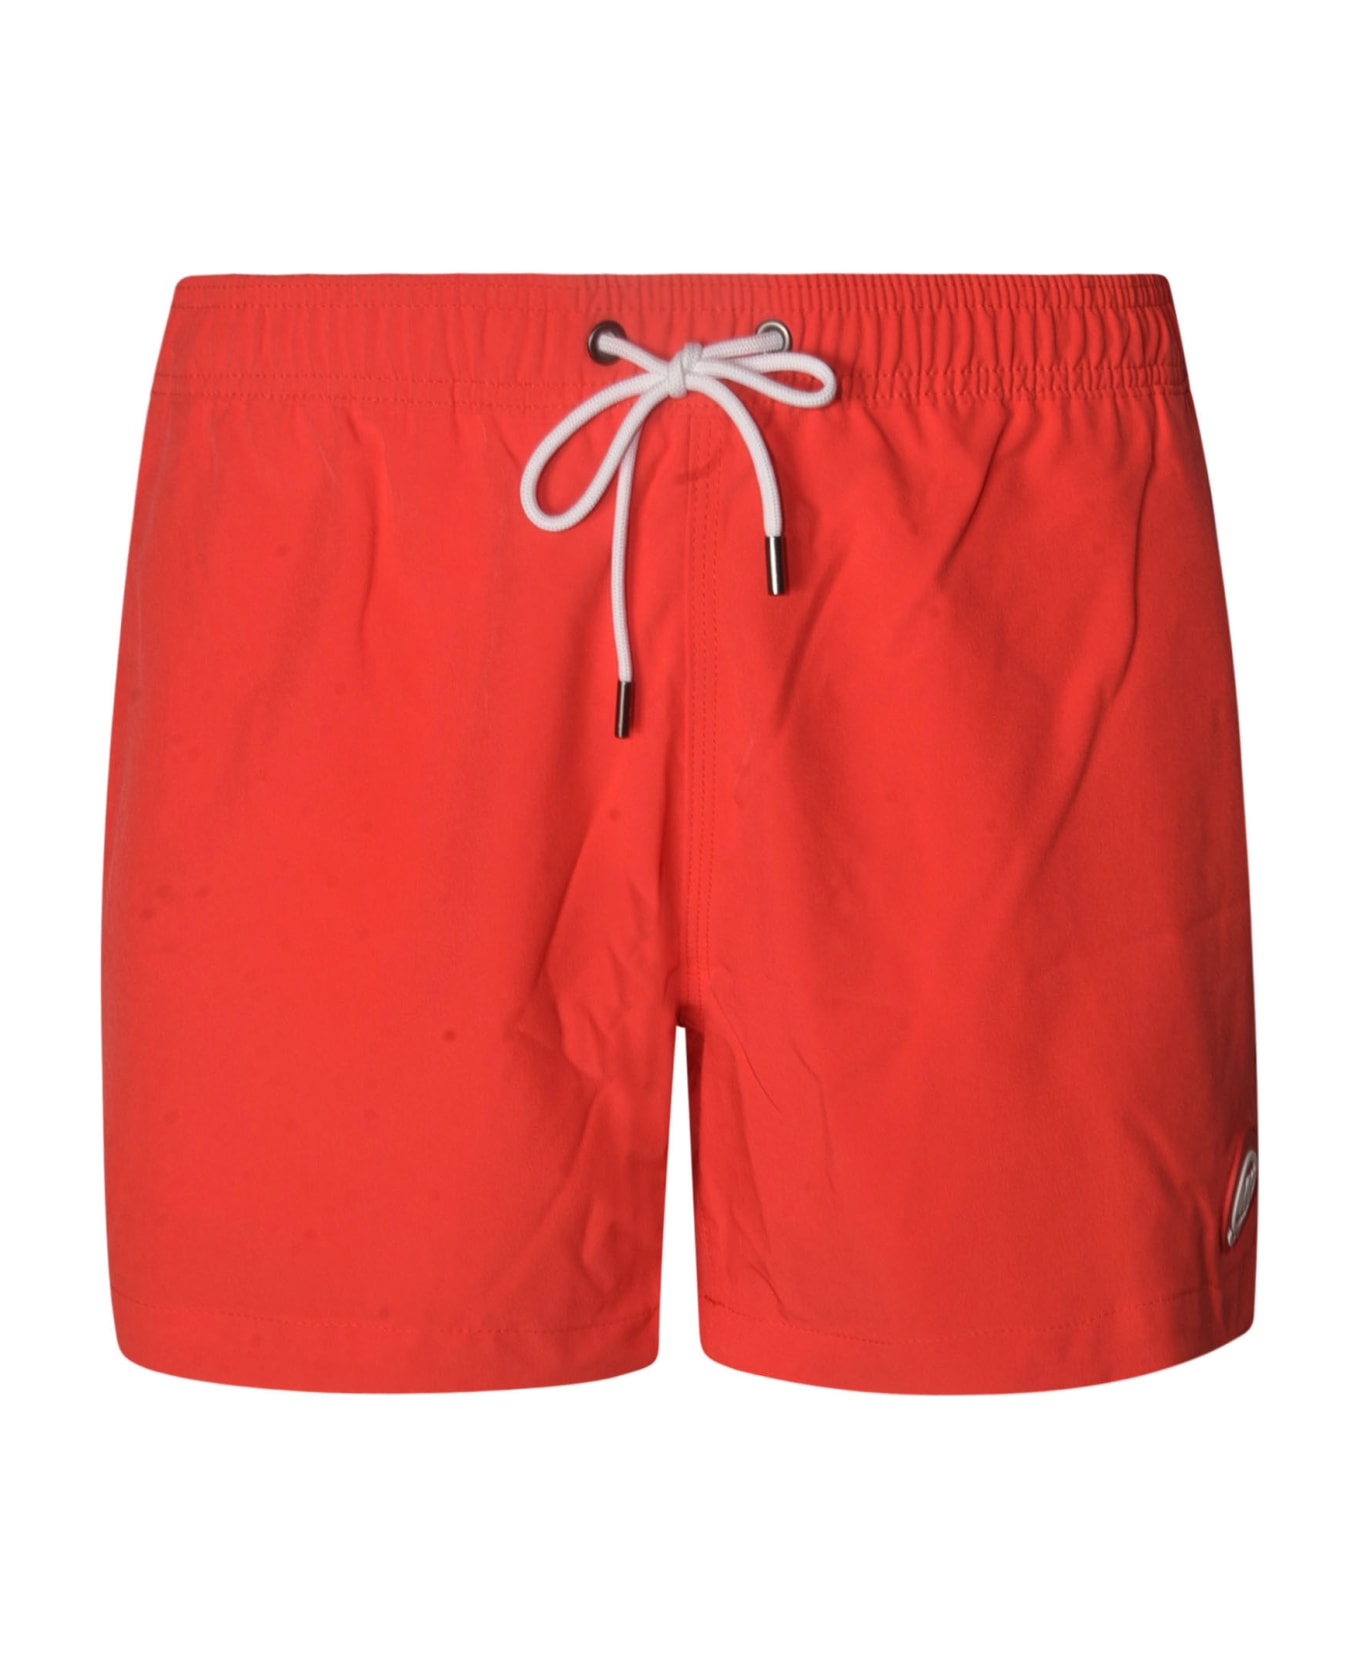 Michael Kors Elastic Drawstring Waist Logo Shorts - Coral